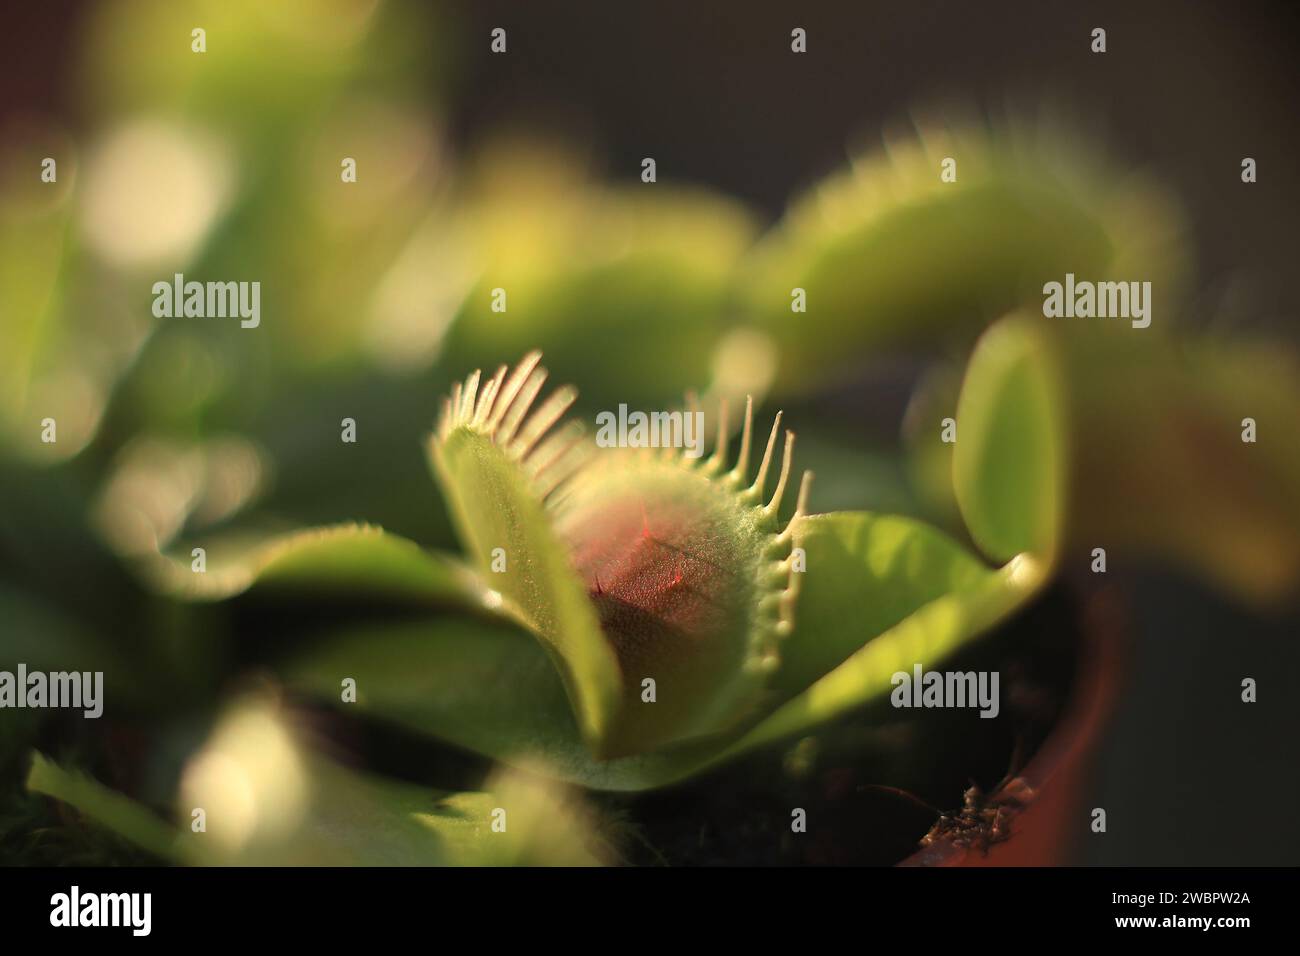 A venus flytrap carnivorous plant closeup. Stock Photo